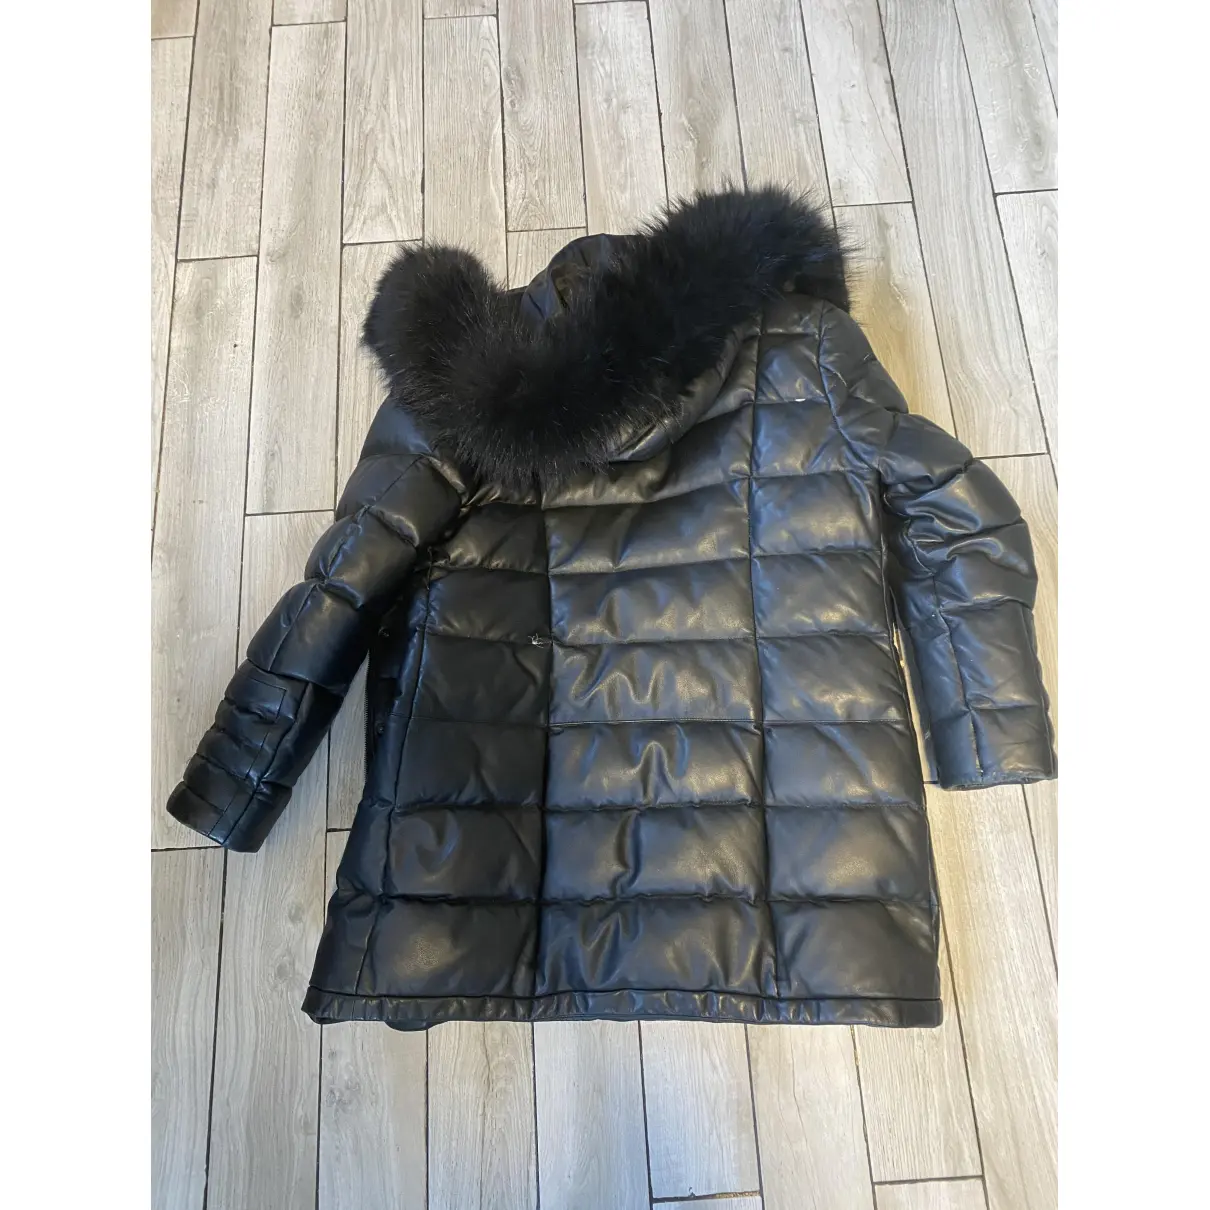 Buy Zapa Leather coat online